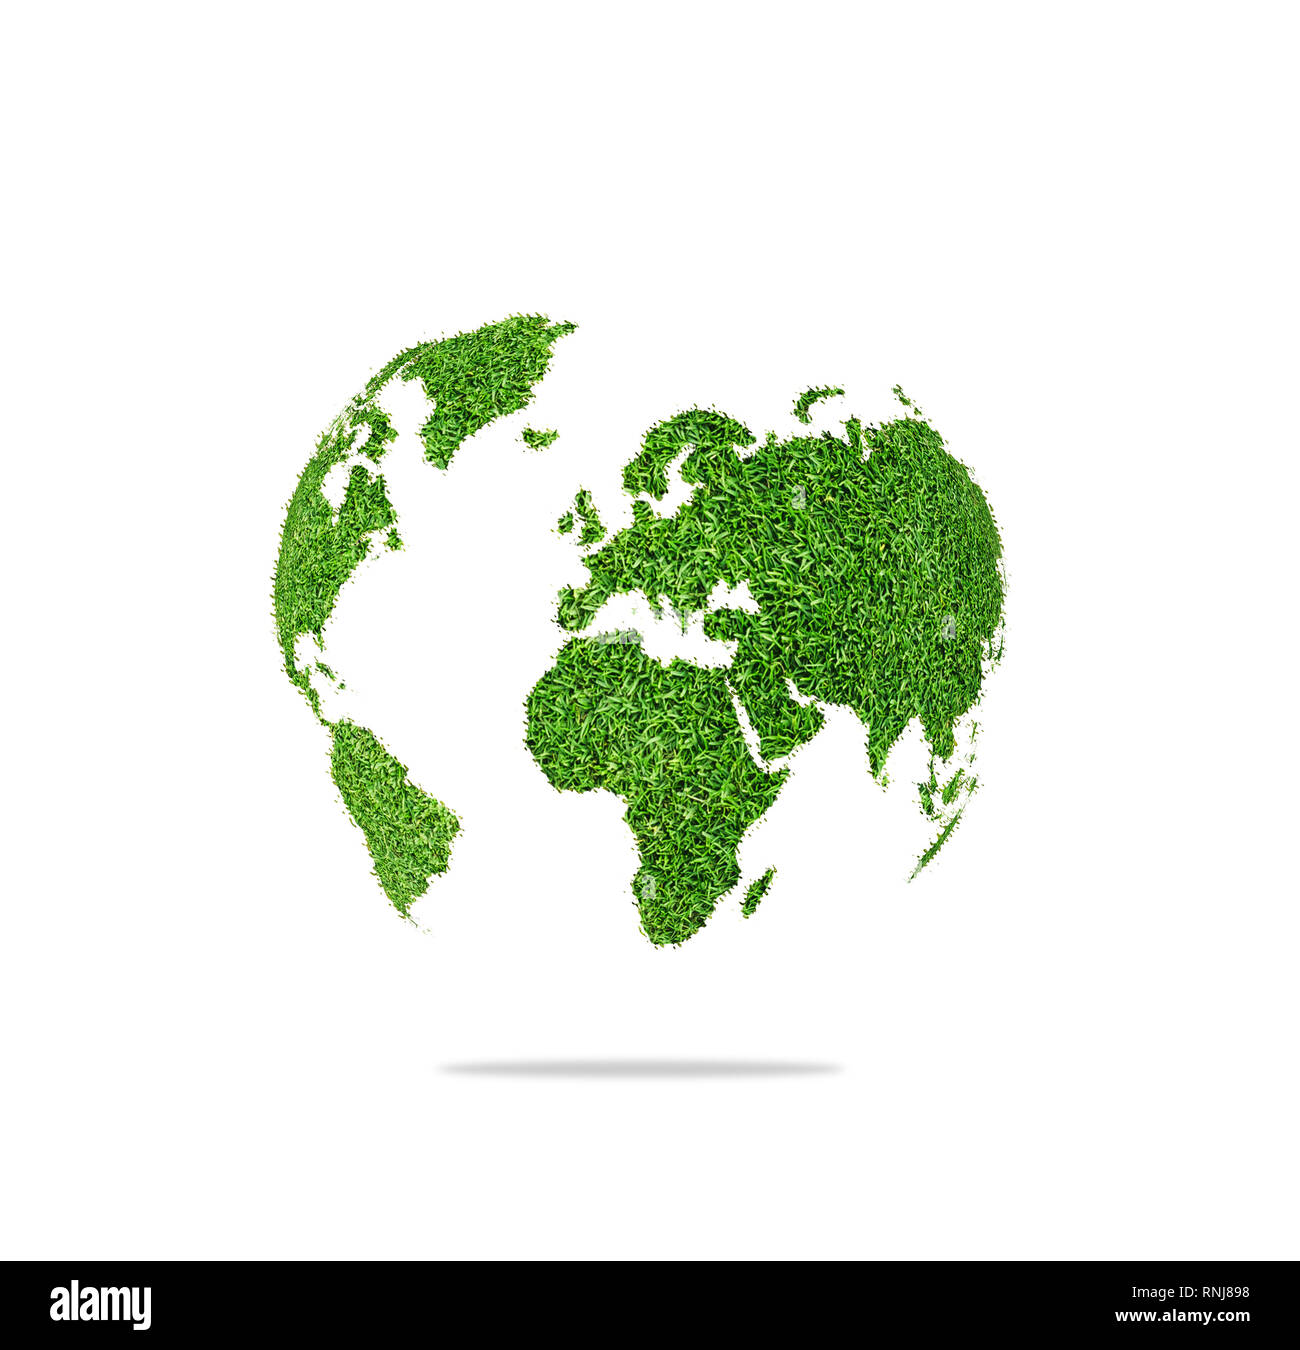 World globe forme d'herbe verte isolée sur fond blanc Banque D'Images